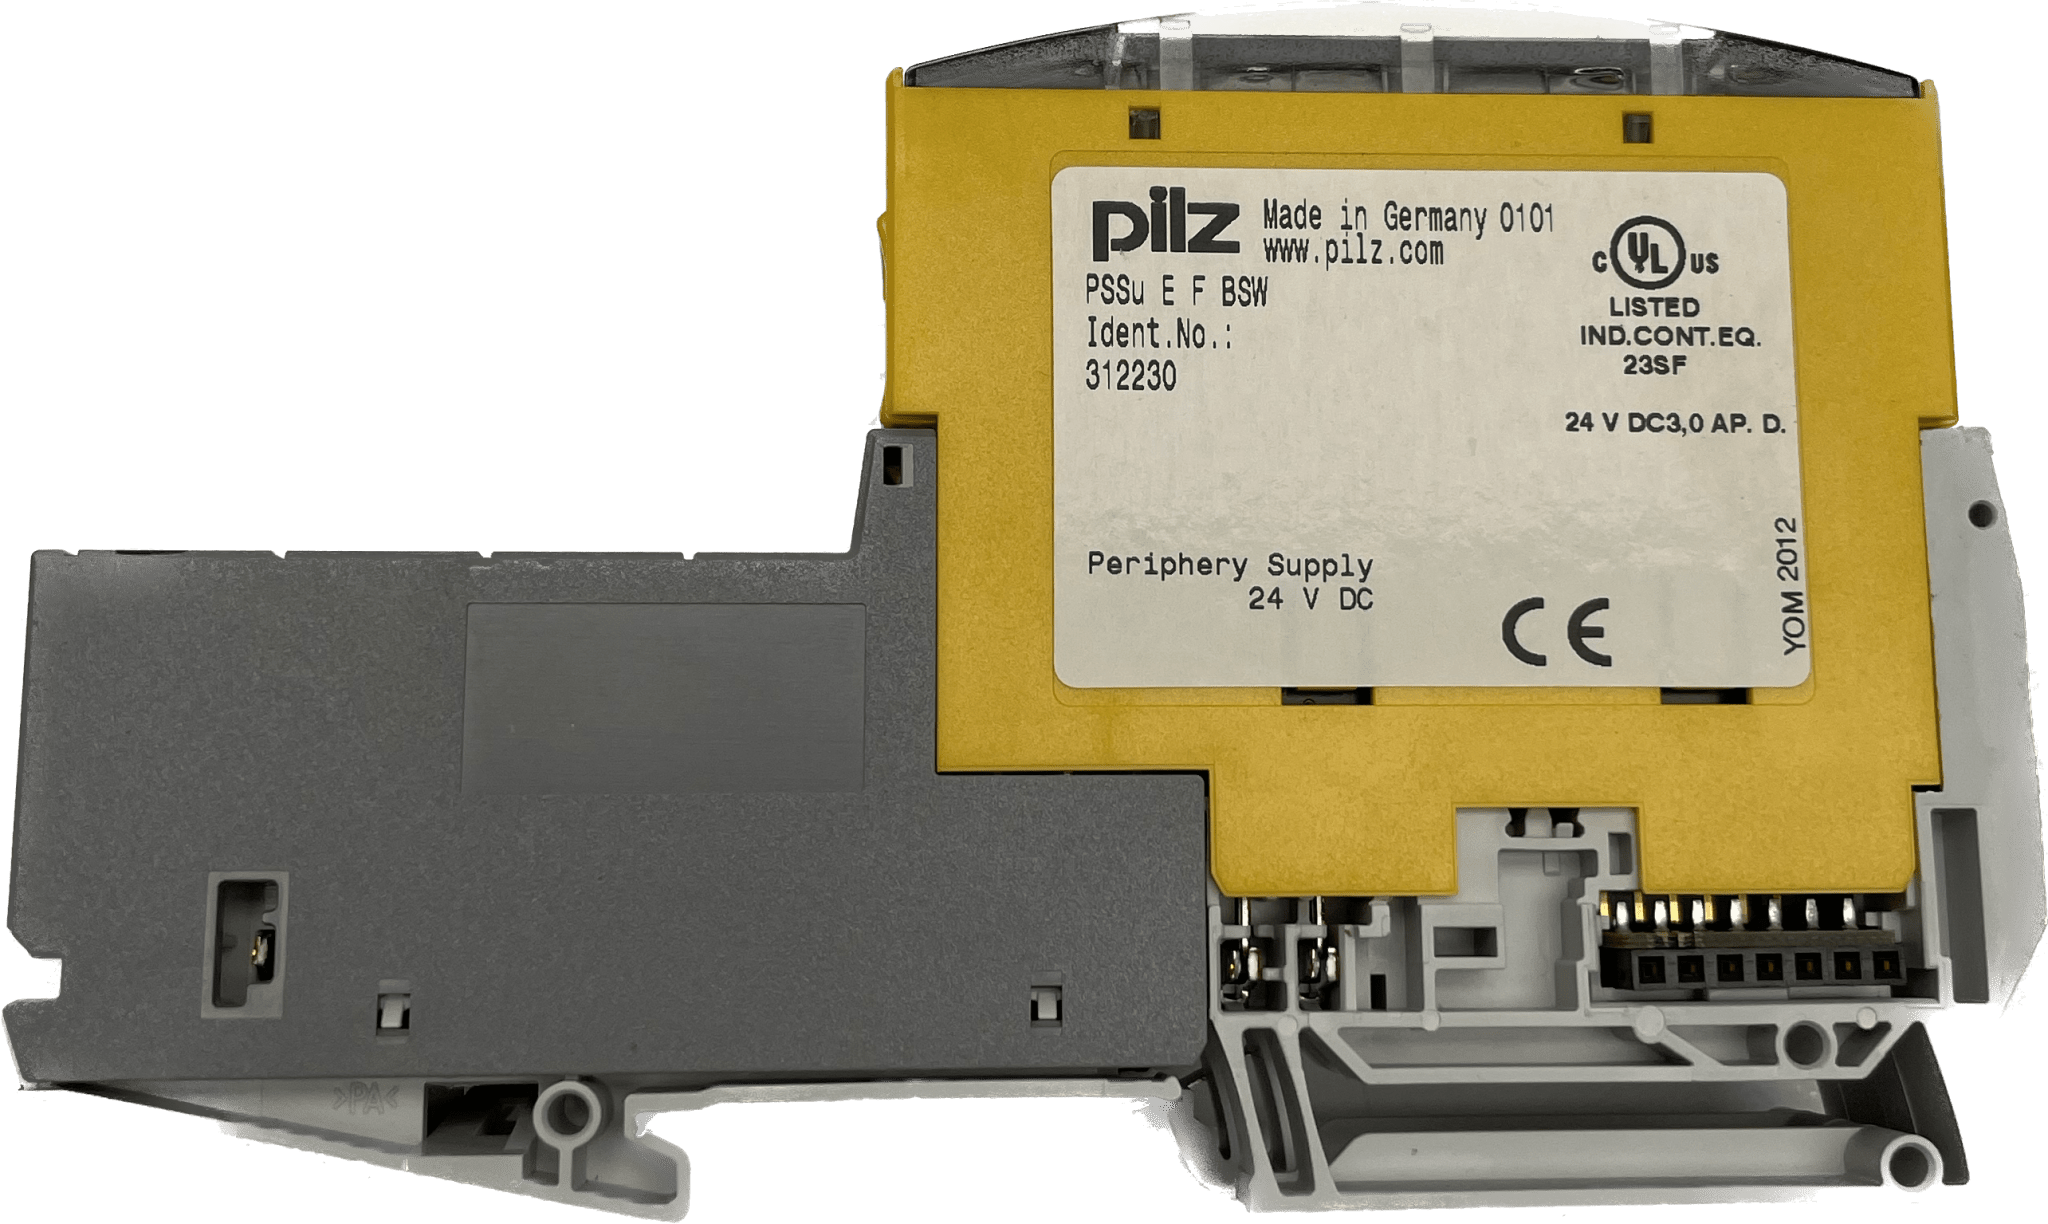 Pilz PSSu E F BSW 312230 - #product_category# | Klenk Maschinenhandel